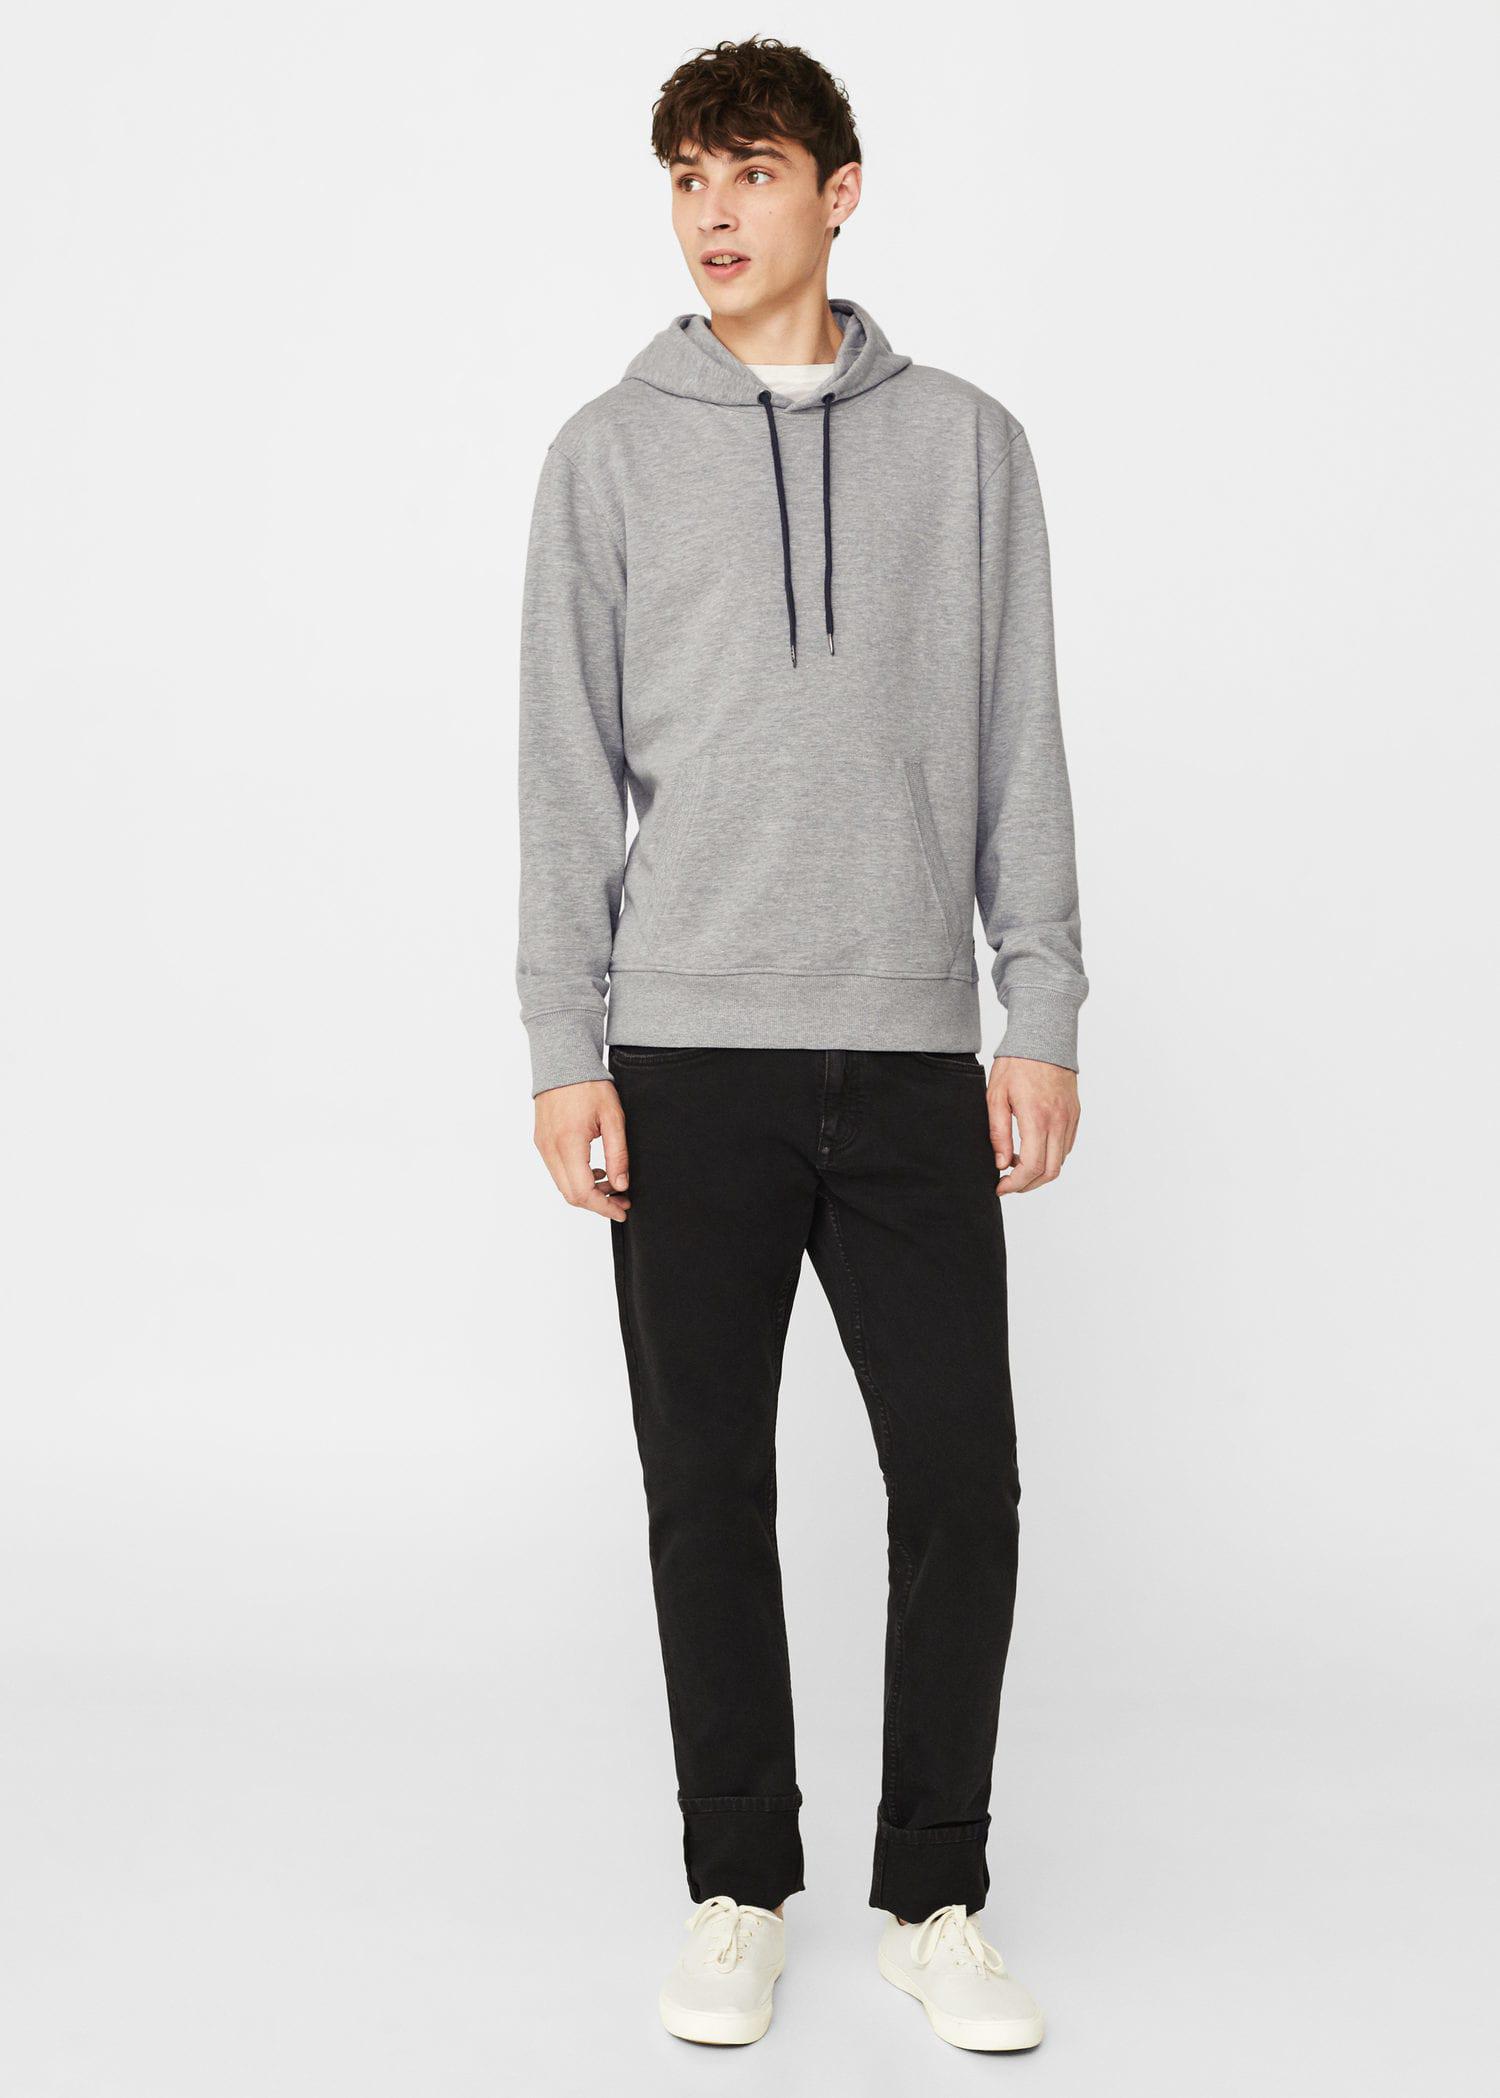 Lyst - Mango Hoodie Cotton Sweatshirt in Gray for Men